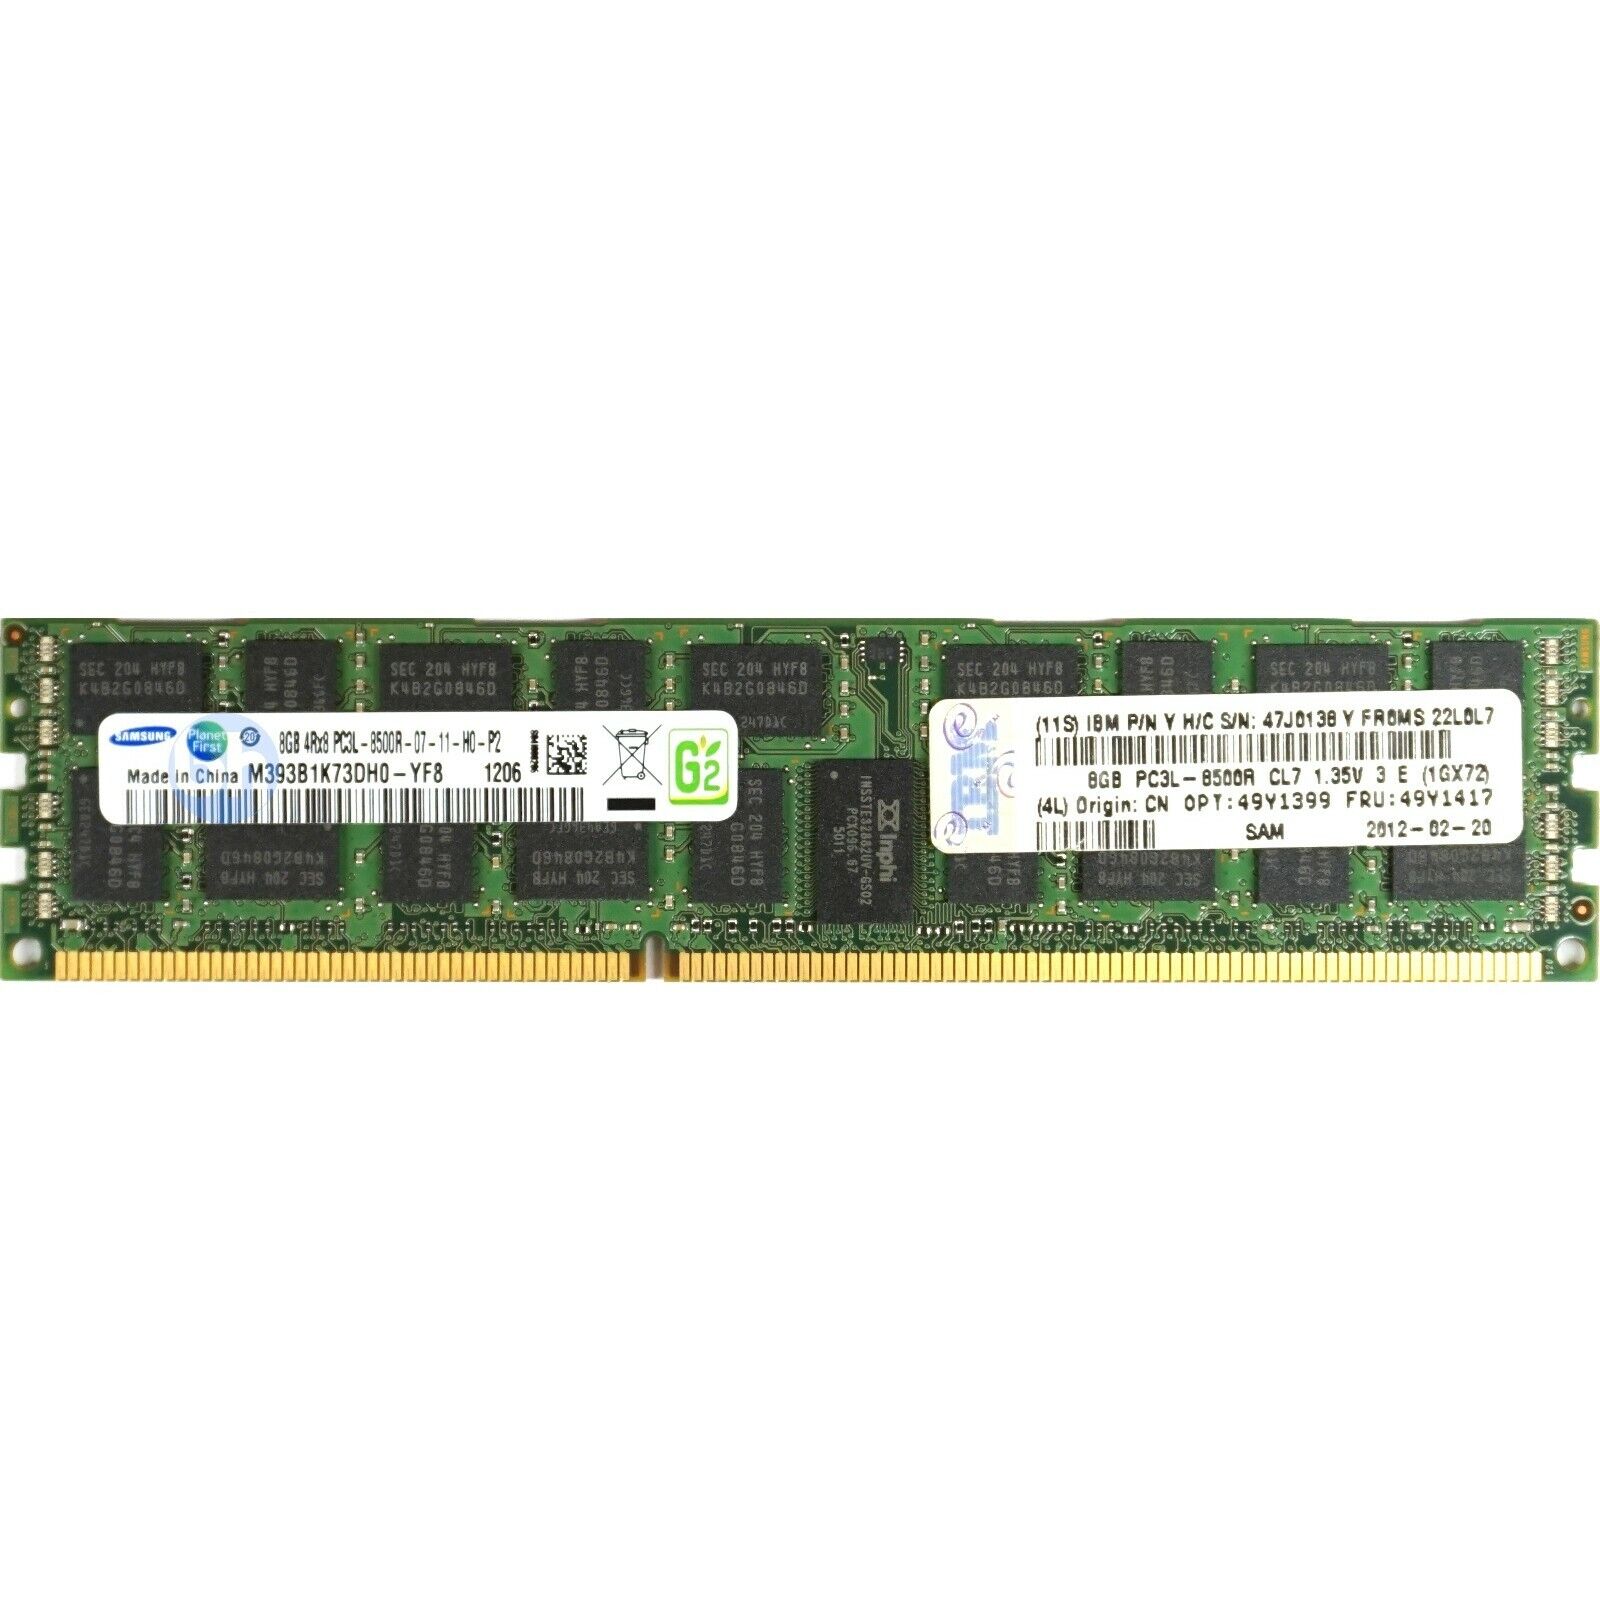 47J0138 IBM Samsung 8GB 4RX8 PC3L-8500R MEMORY MODULE (1X8GB) for Dell R420